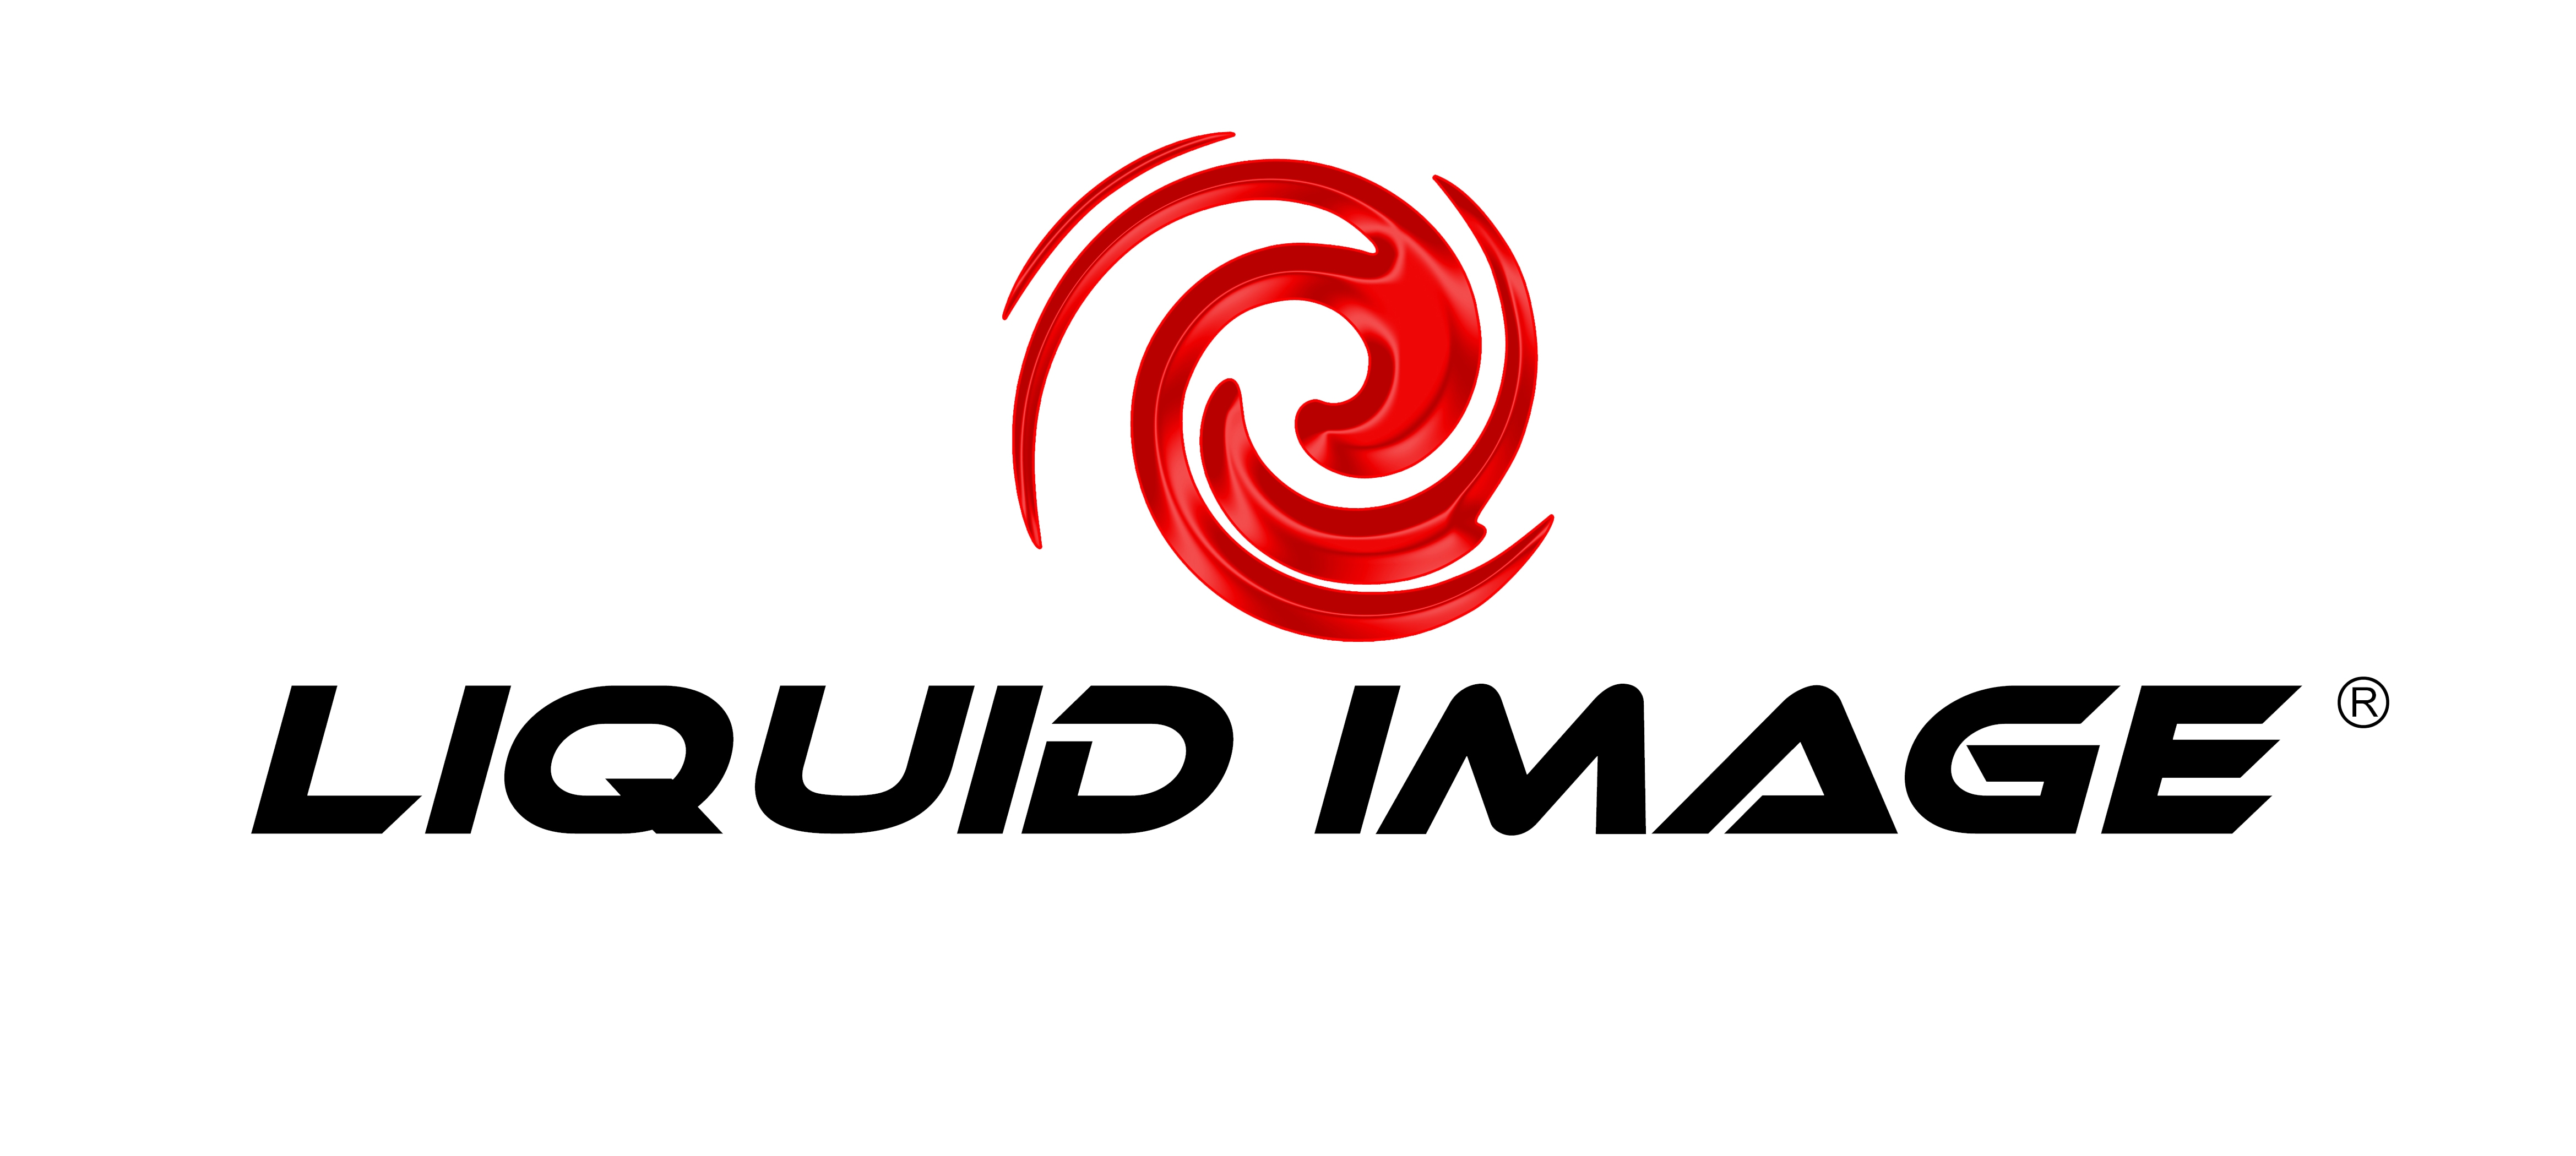 LIQUID IMAGE (caméra intégrée)